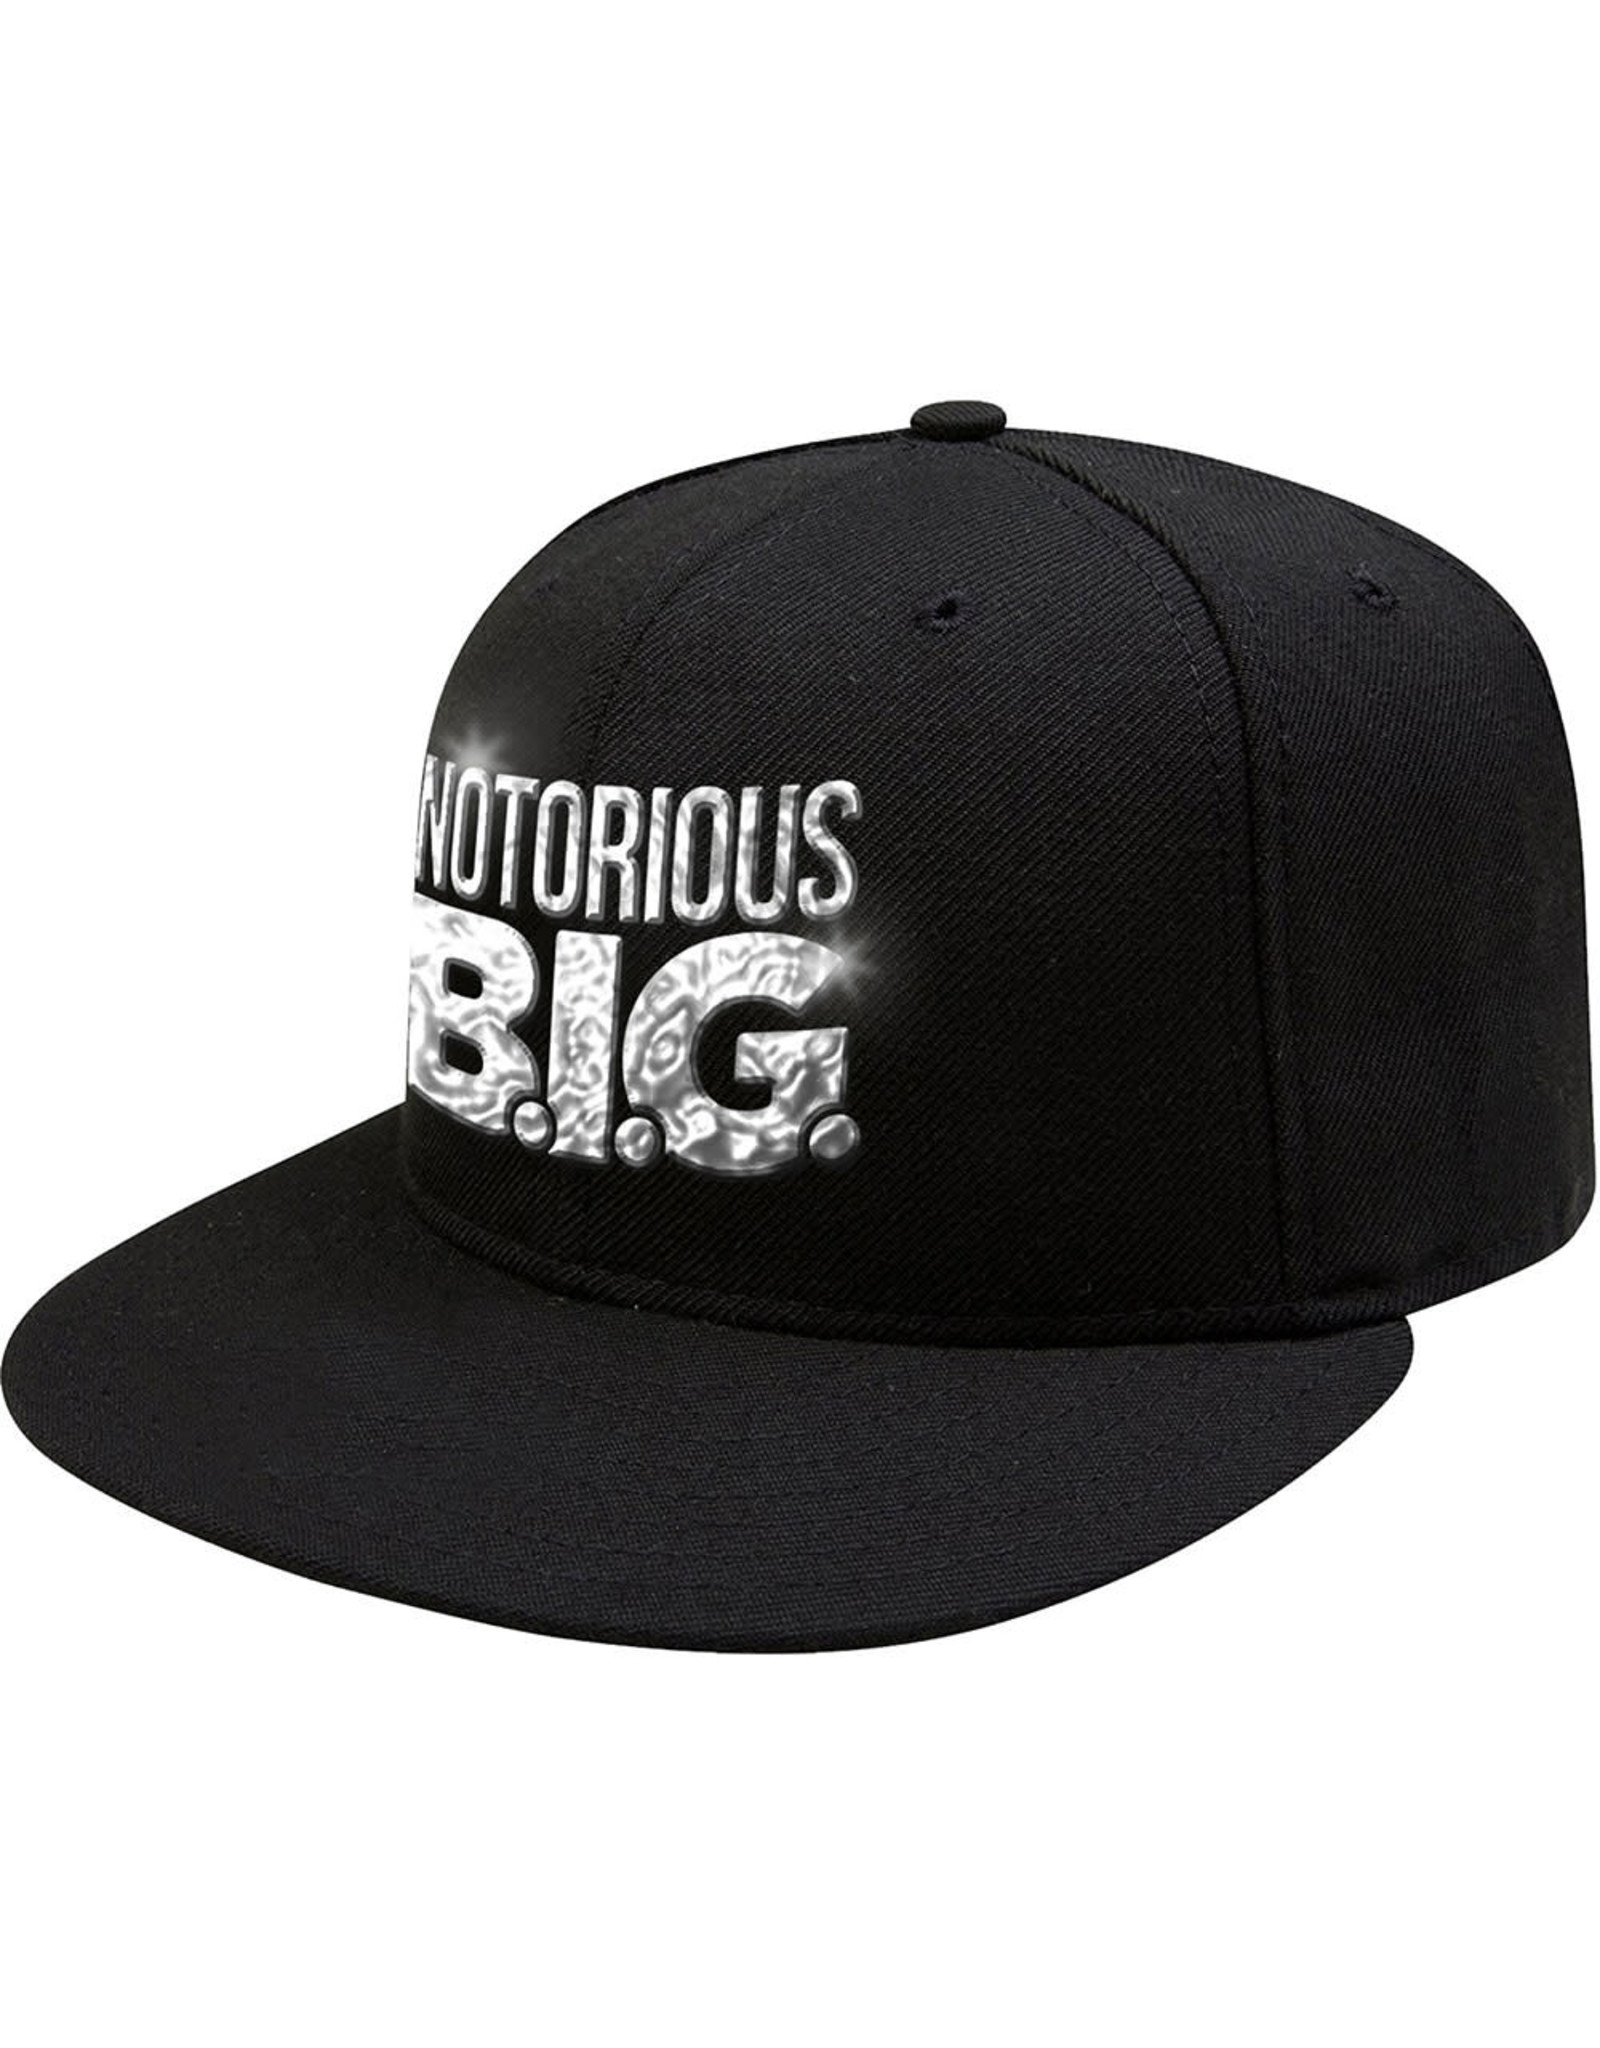 The Notorious B.I.G. / Classic Logo Snapback Cap